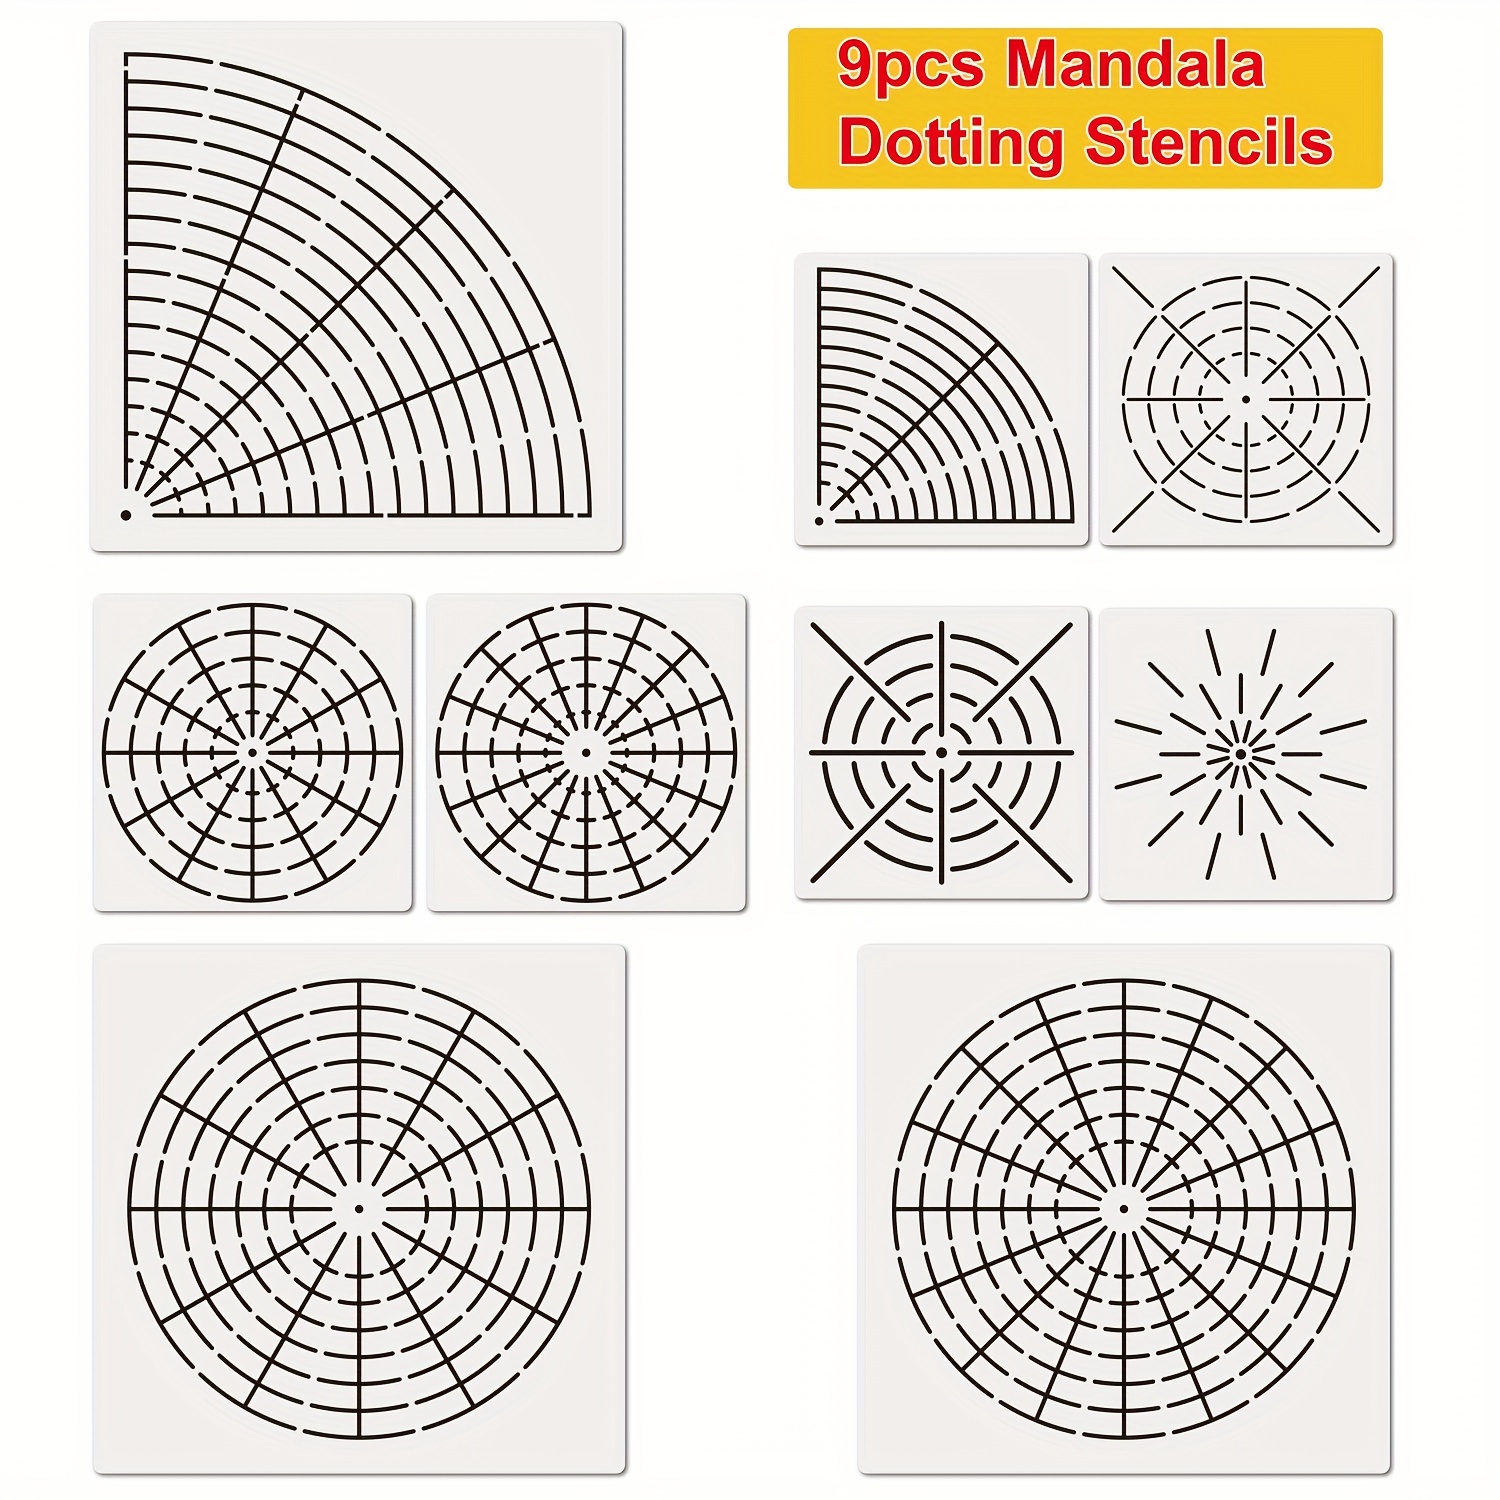 

9pcs Mandala Dot Painting Tool Stencils Template Set, 8/12/16 Segment Creative Mandala Stencils Reusable Painting Stencils For Diy Painting Art Projects